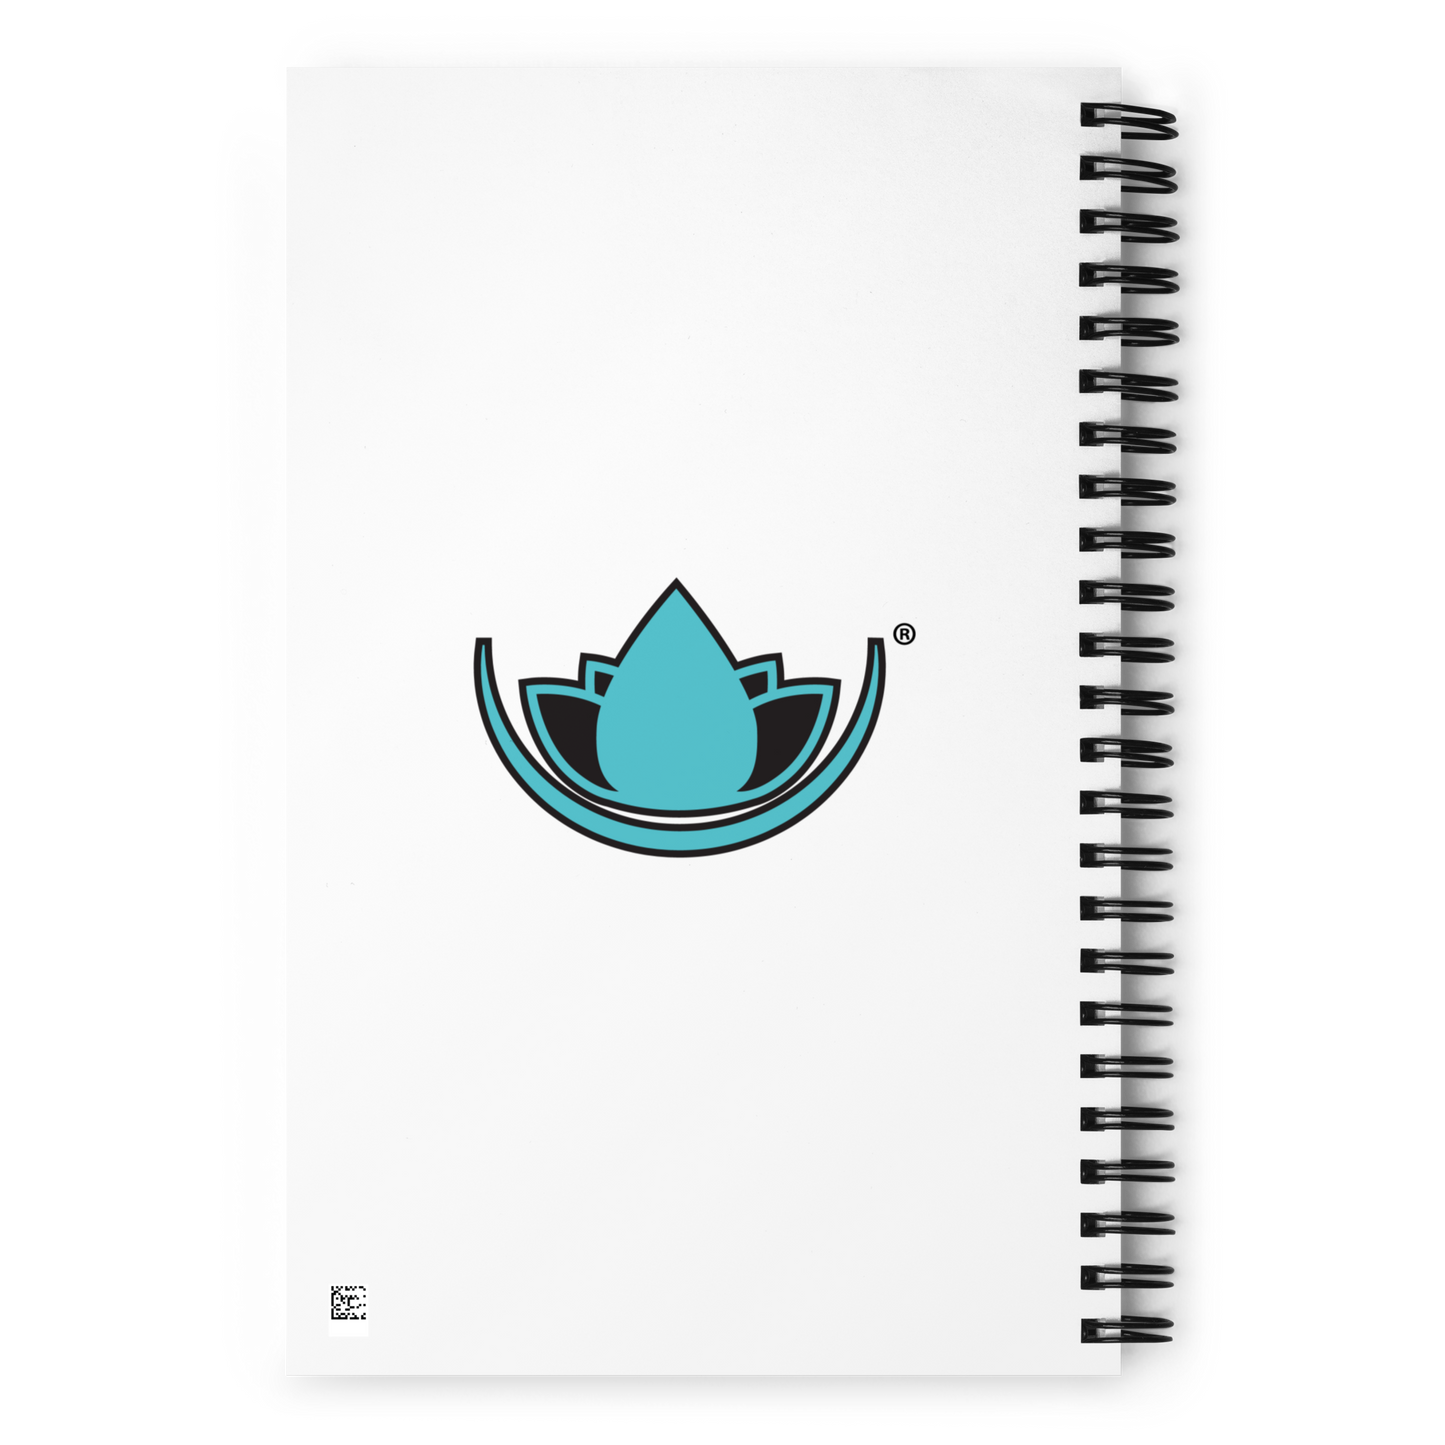 Scottsdale Recovery Logo Spiral Notebook